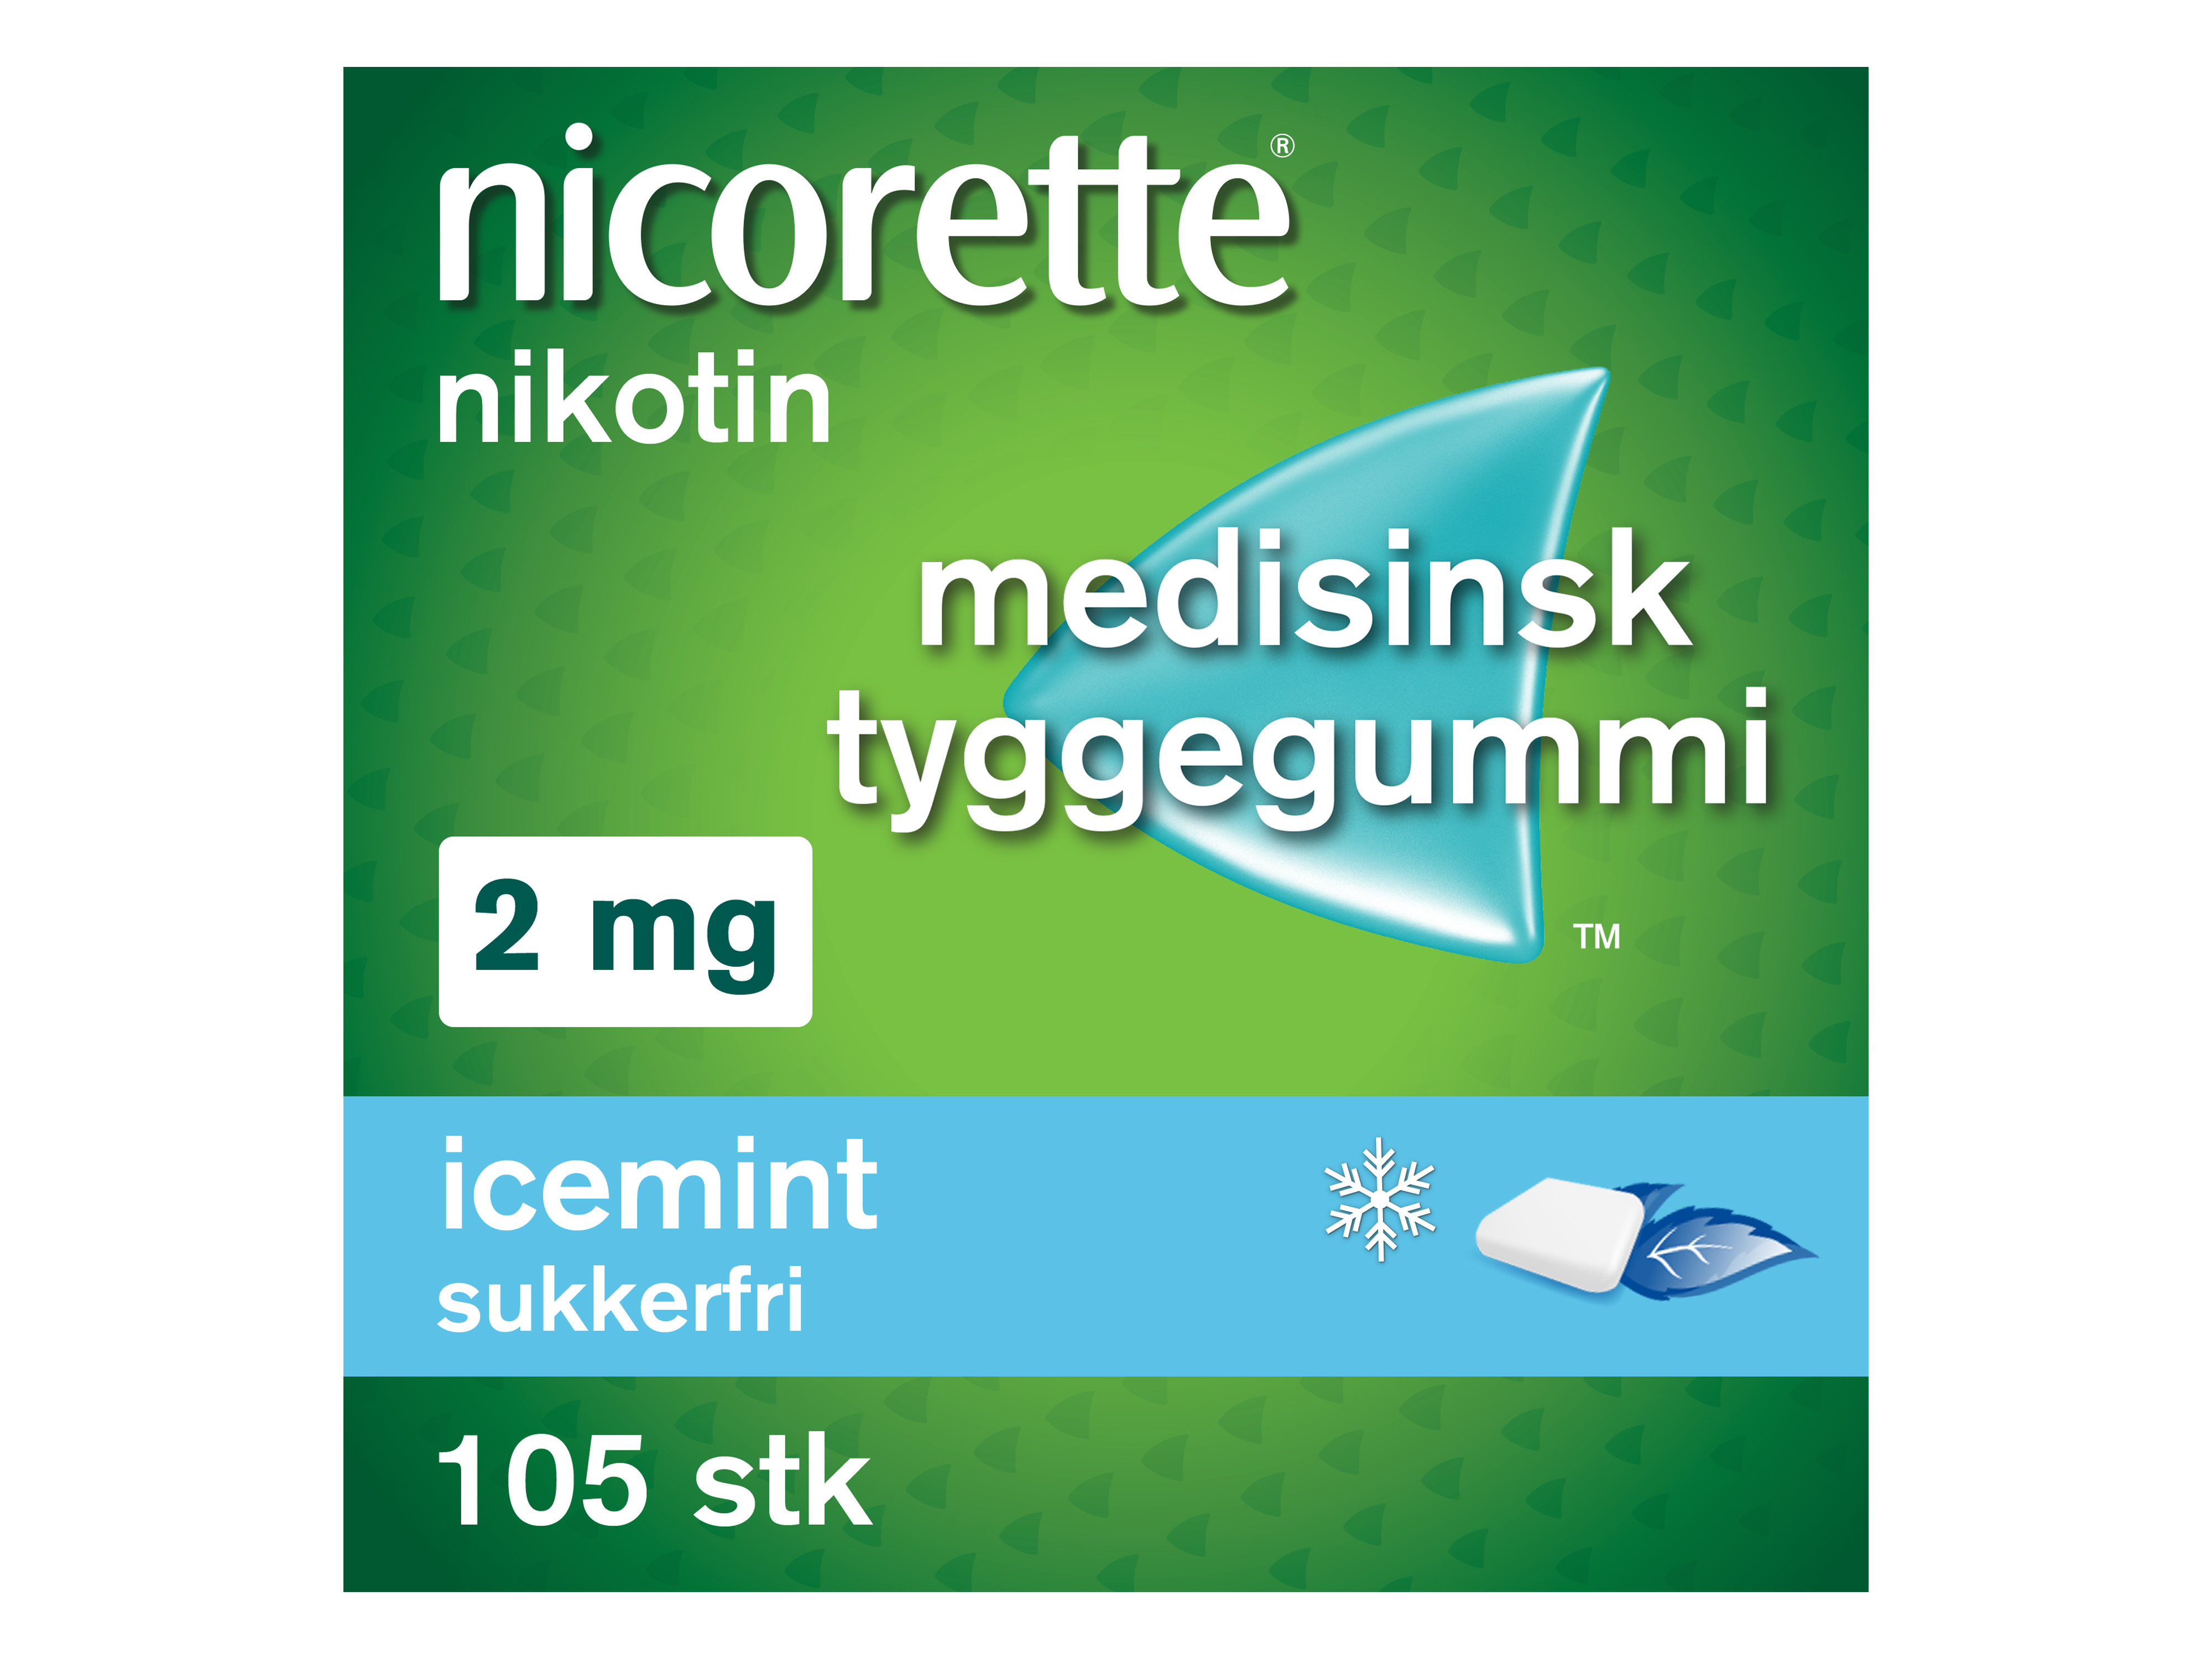 Nicorette Tyggegummi, 2 mg nikotin, Icemint 105 stk., Slutte å røyke